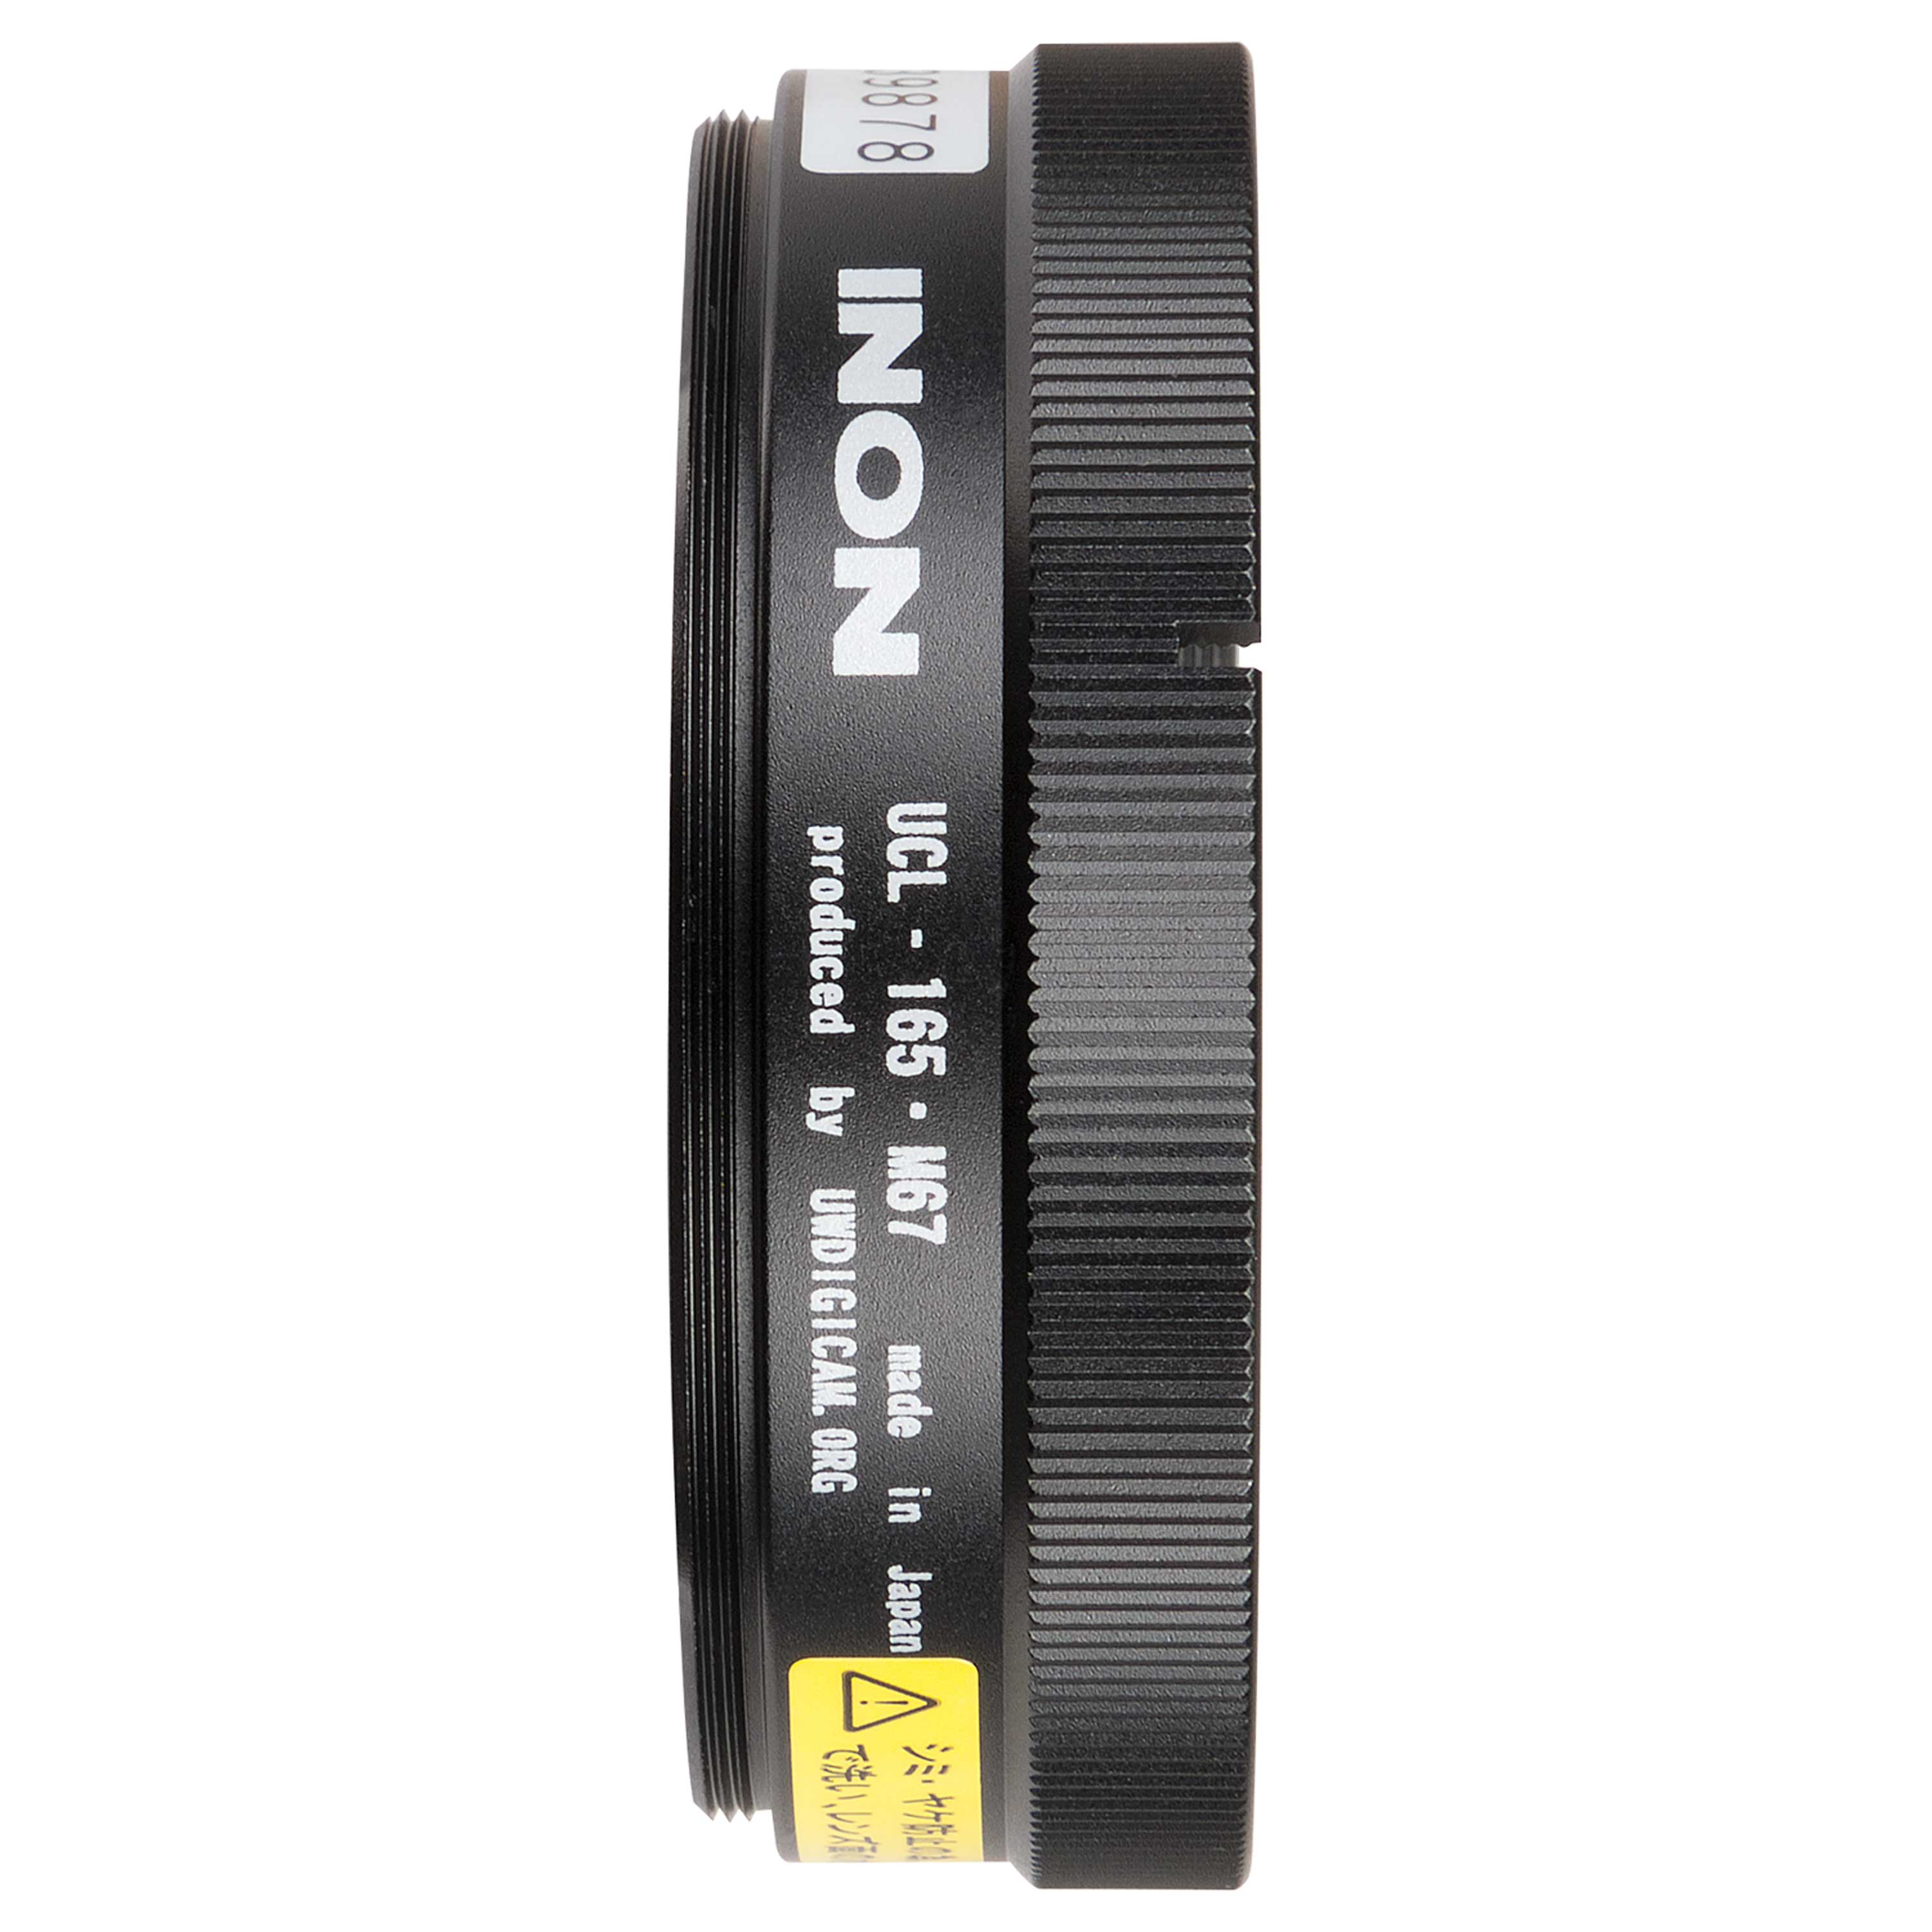 INON UCL-165 M67 Close Up Macro Wet Lens